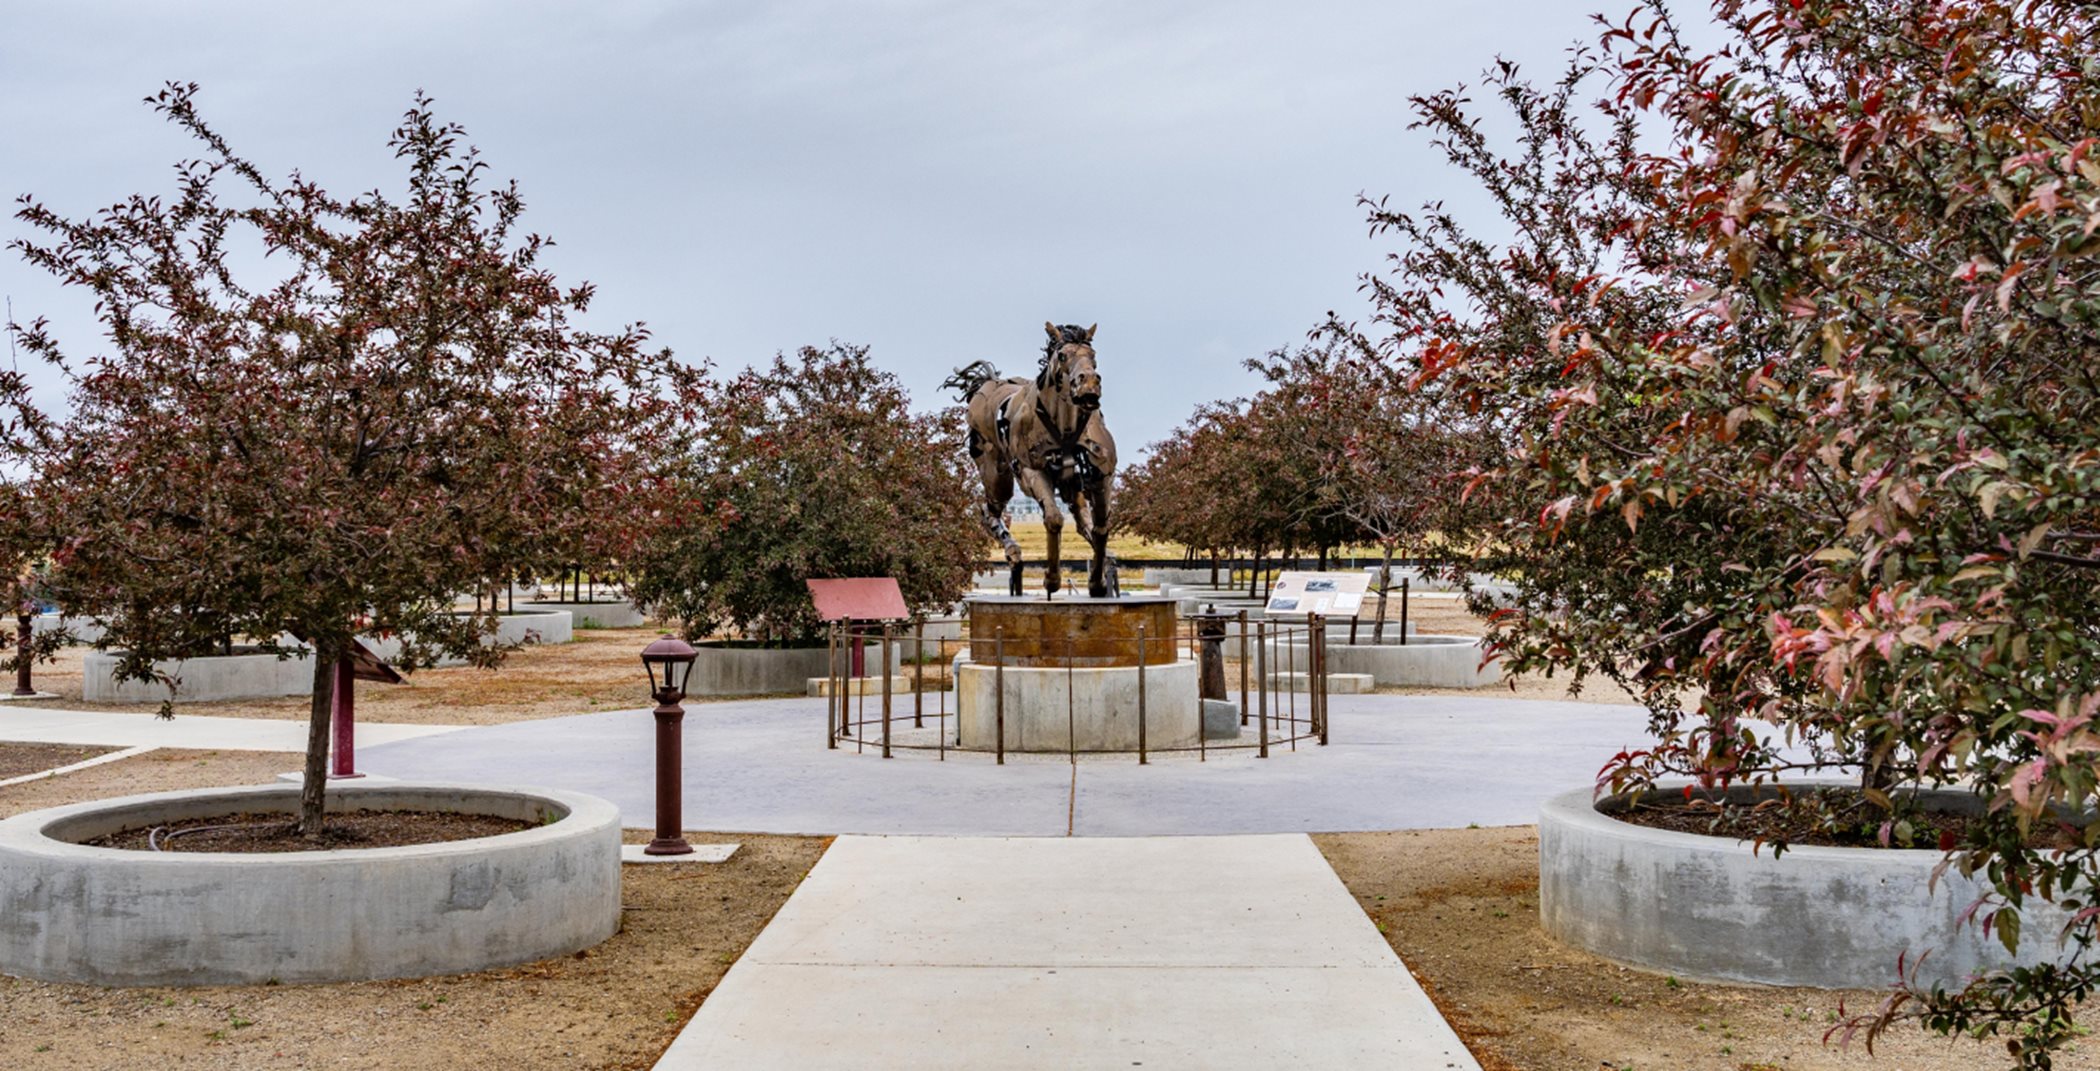 The Dry Creek Trailhead monument statue